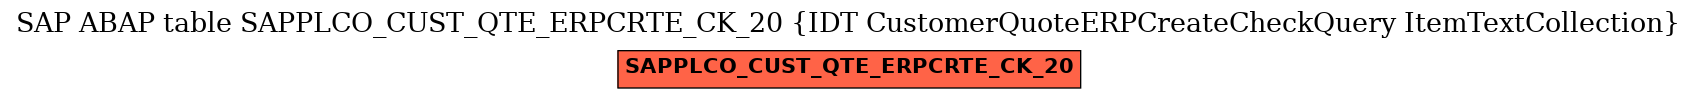 E-R Diagram for table SAPPLCO_CUST_QTE_ERPCRTE_CK_20 (IDT CustomerQuoteERPCreateCheckQuery ItemTextCollection)